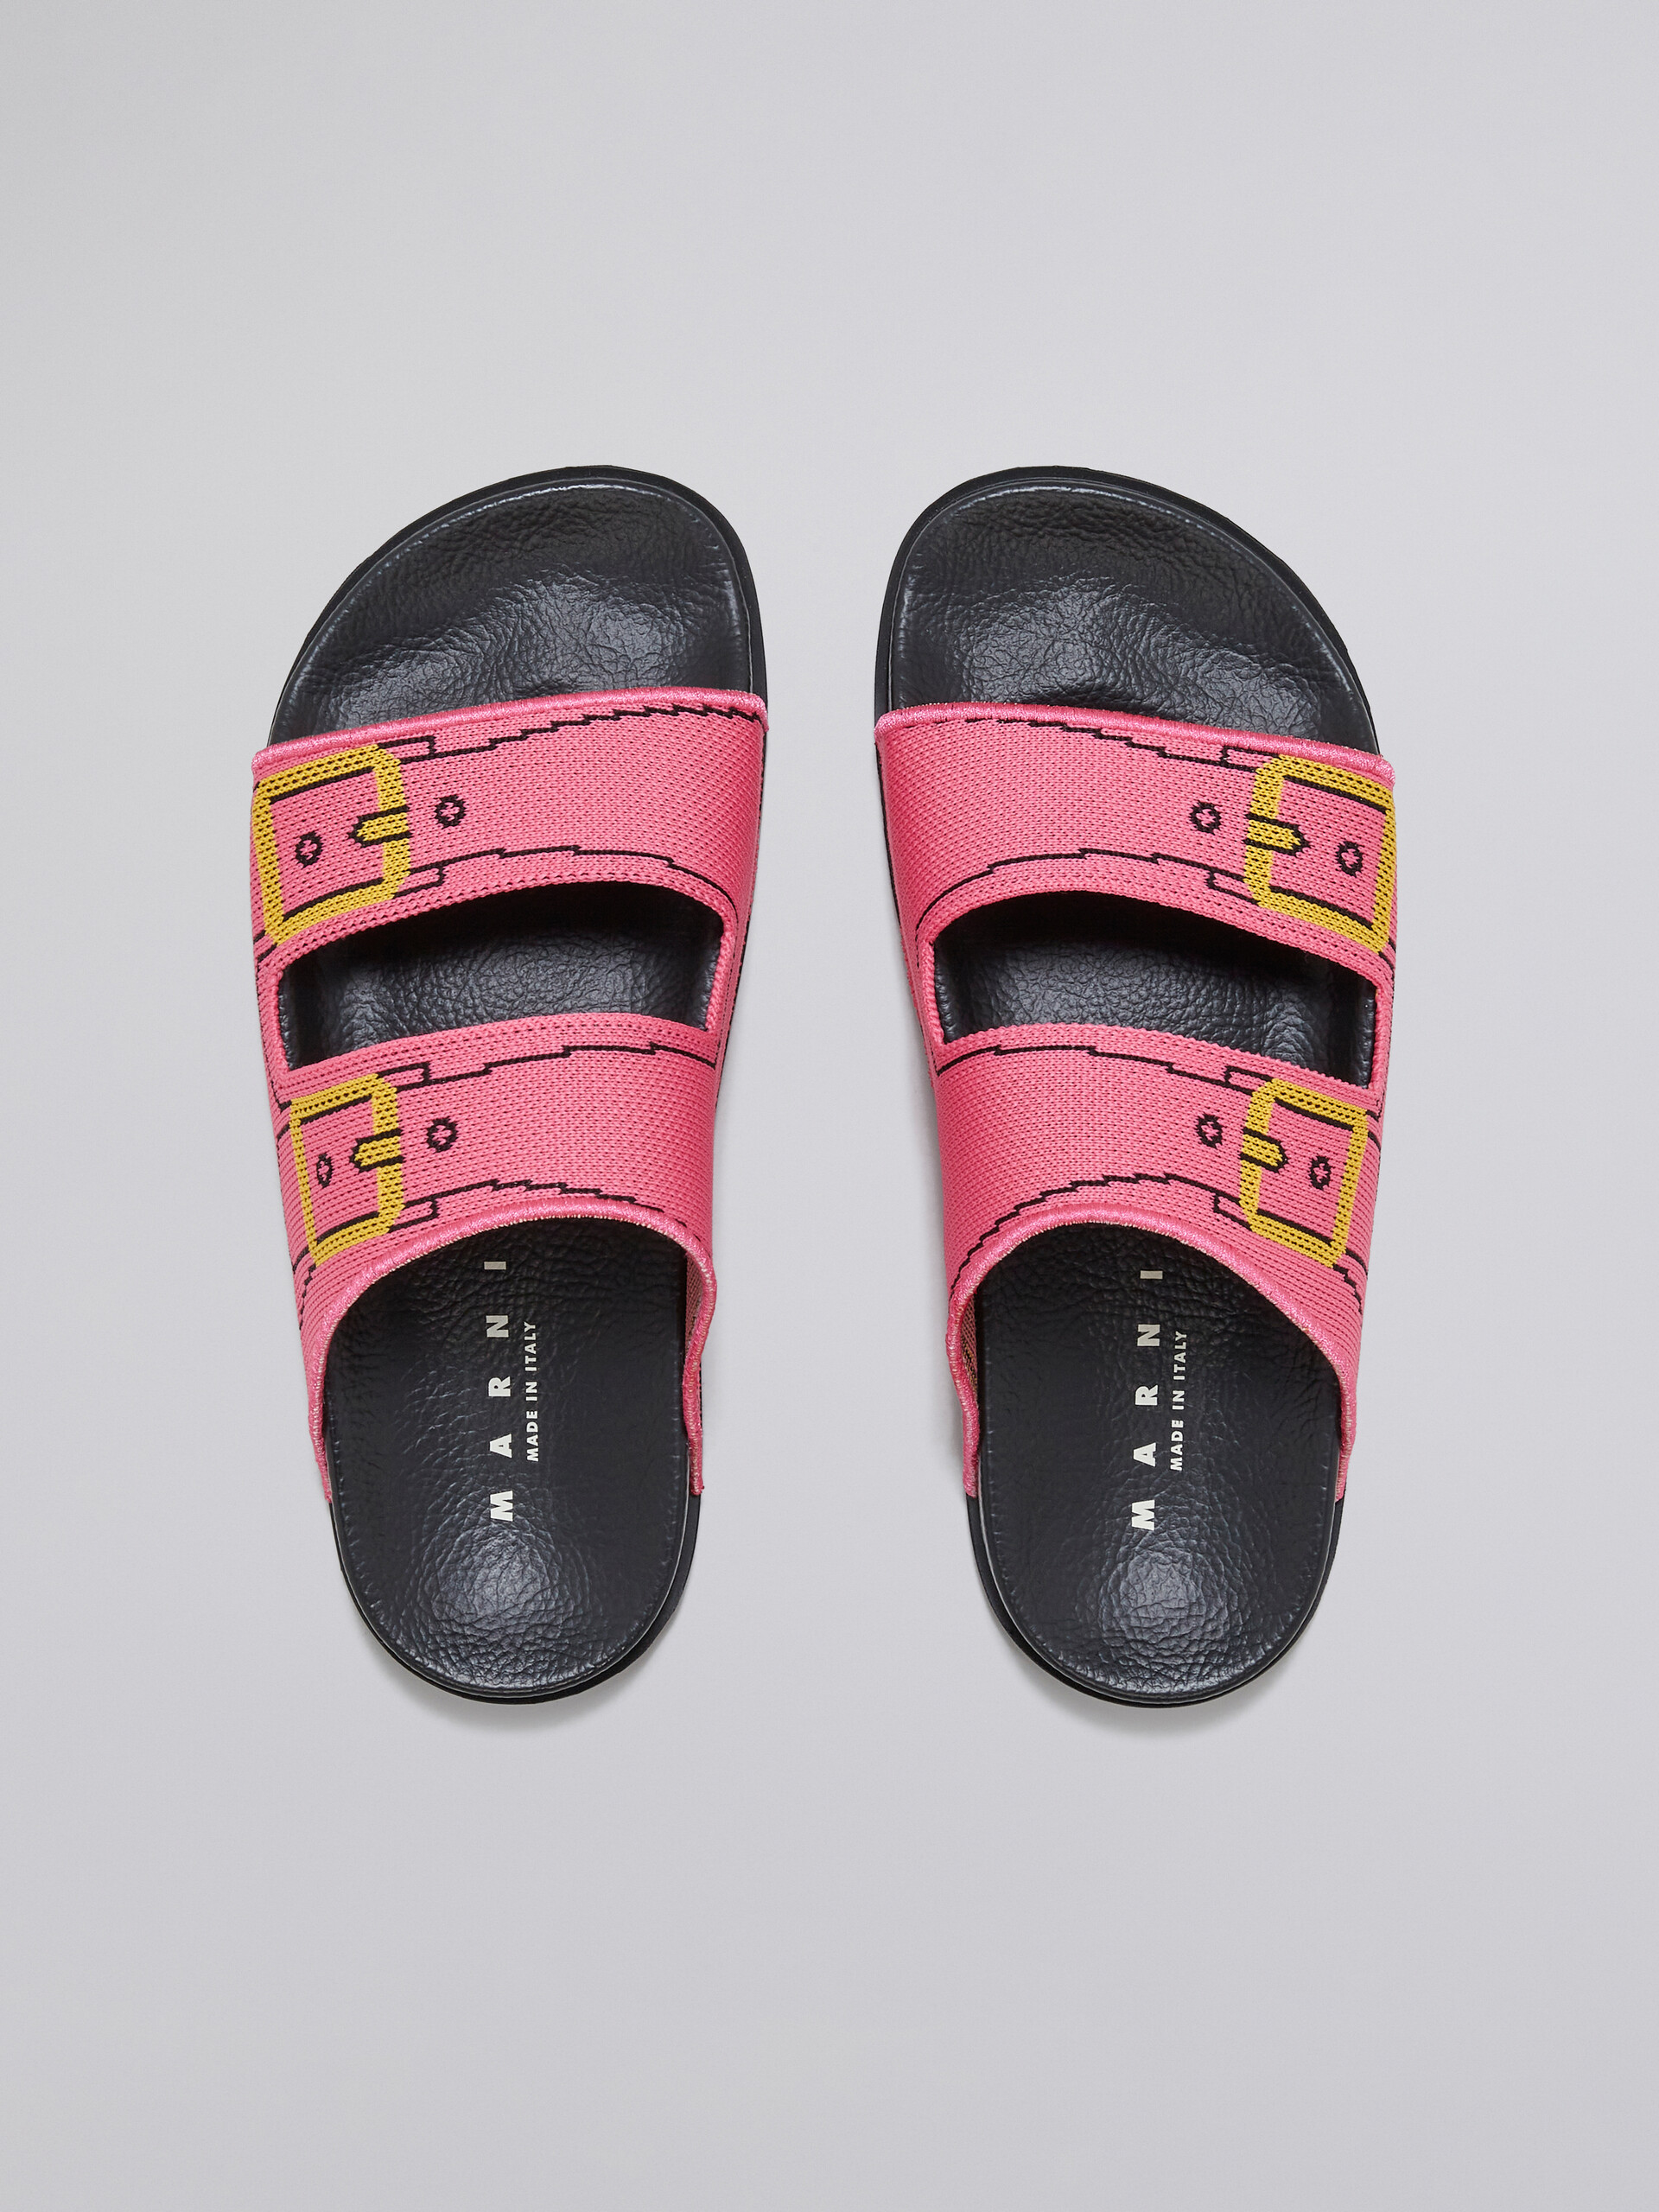 Pink trompe l'œil jacquard two-strap slide - Sandals - Image 4